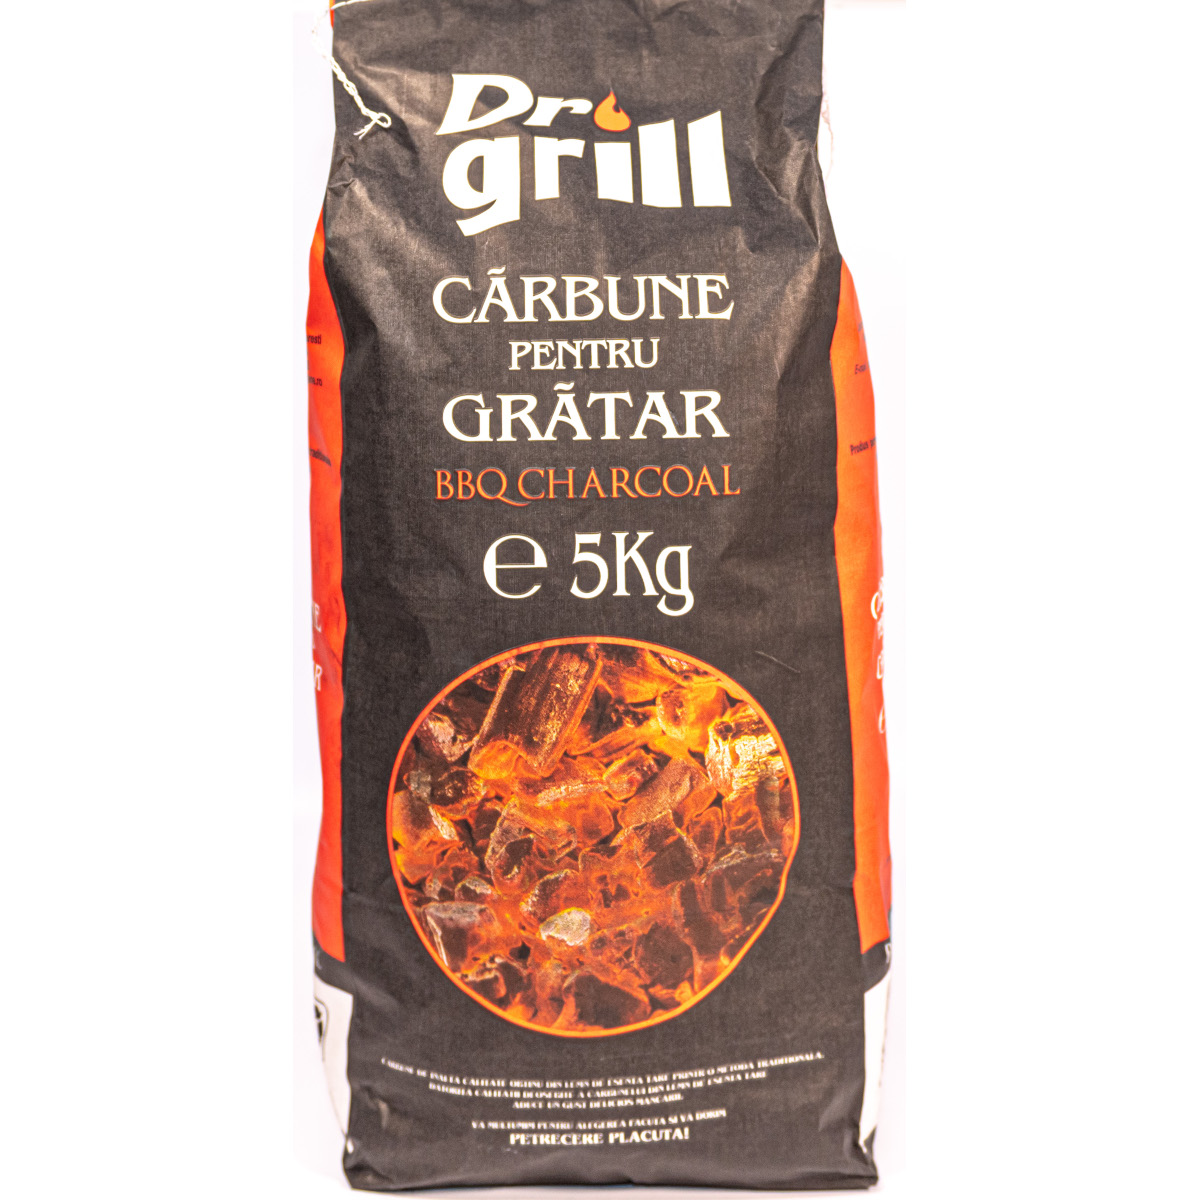 Africa To deal with trace Carbune pentru gratar Dr. Grill, Salt Star Coporation, sac 5kg - BBQ  INGREDIENTS